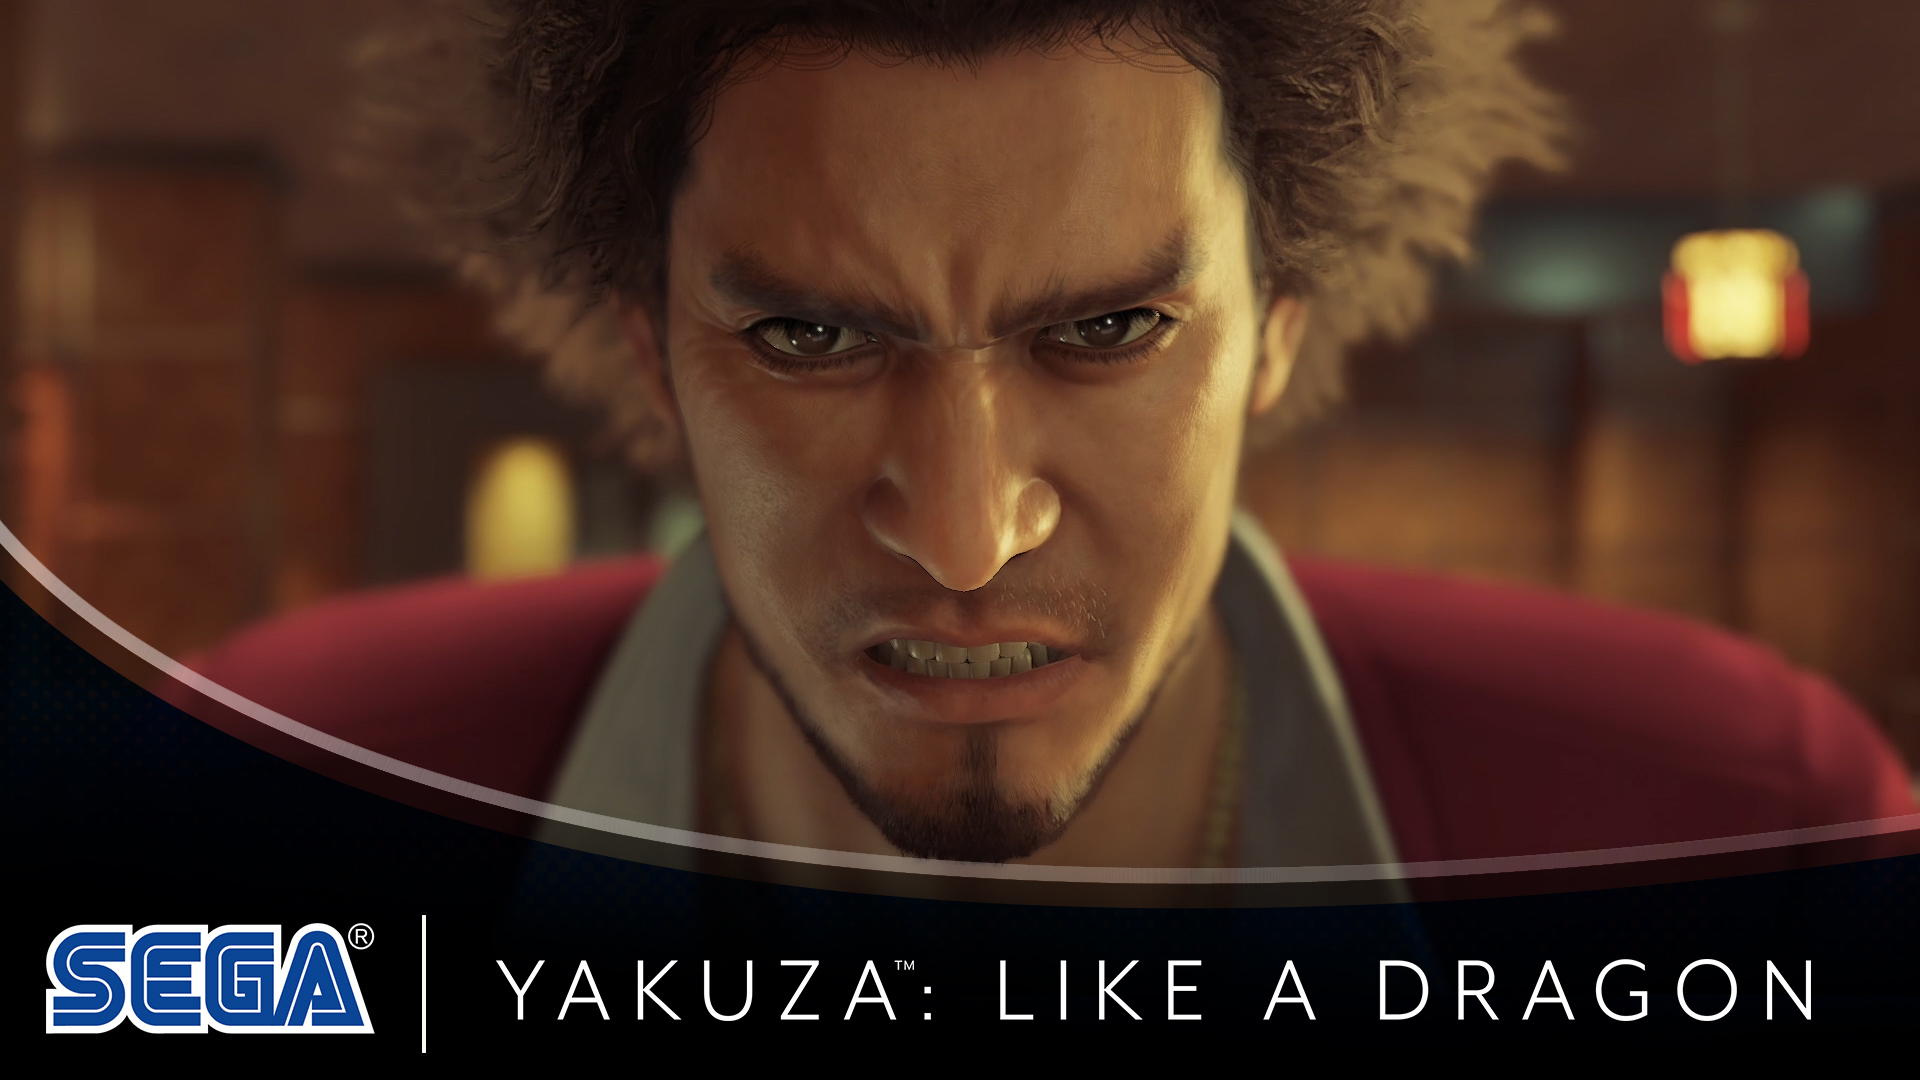 Kisah Yakuza diciptakan kembali dengan Yakuza: Like a Drago